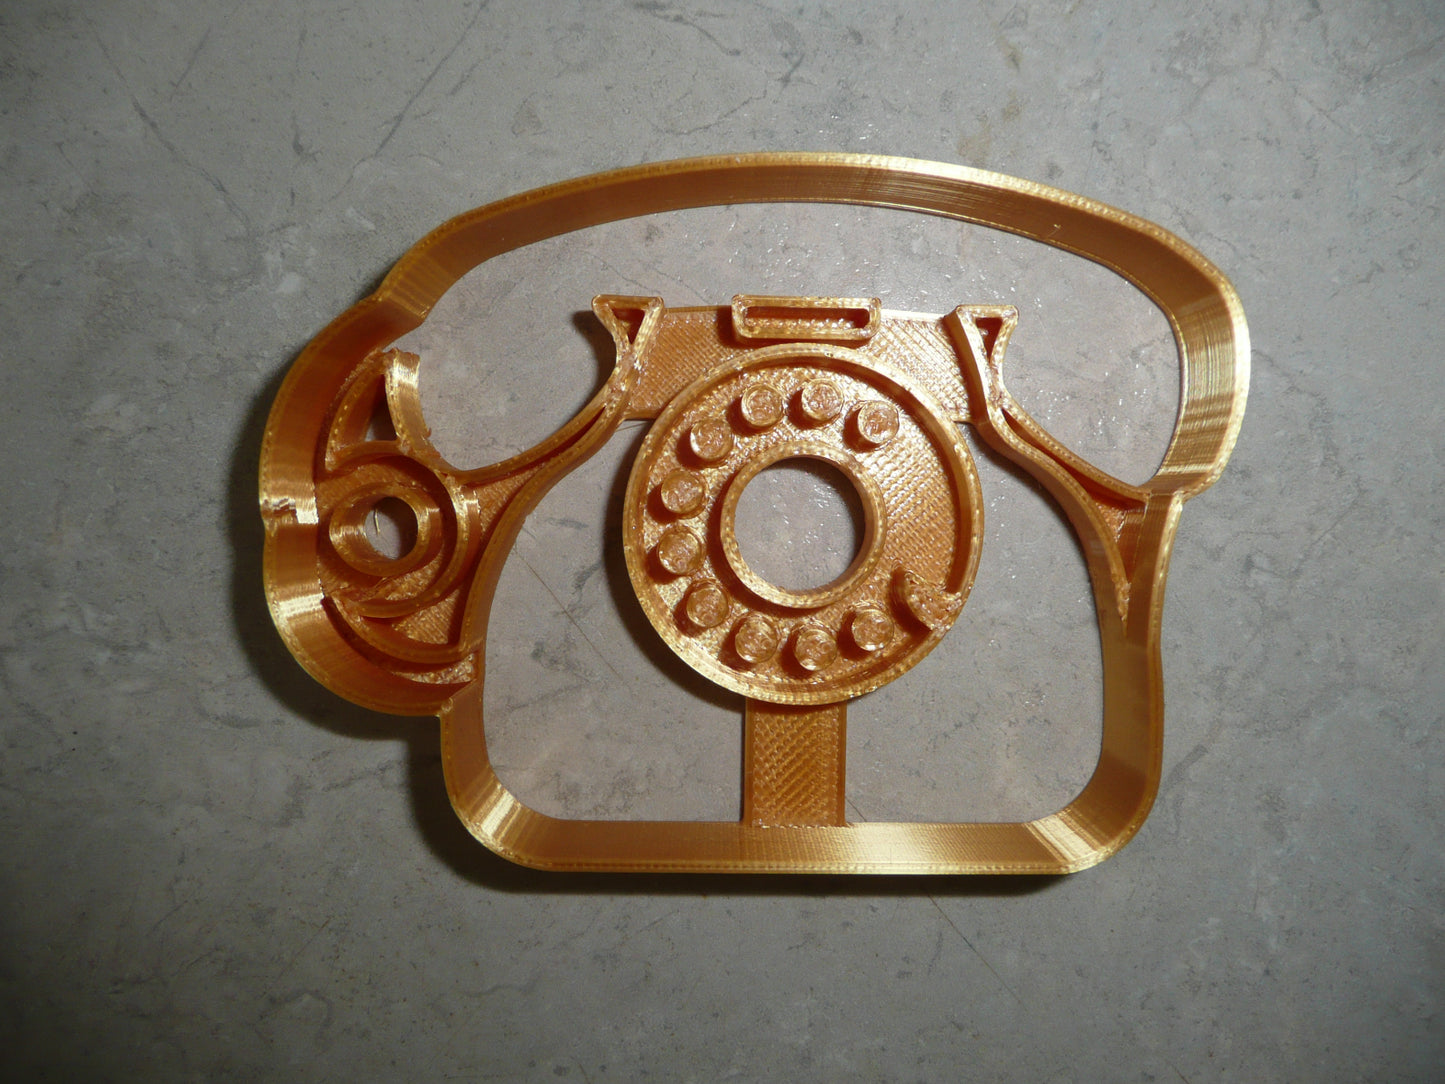 6X Rotary Dial Phone Fondant Cutter Cupcake Topper 1.75 IN USA FD5035